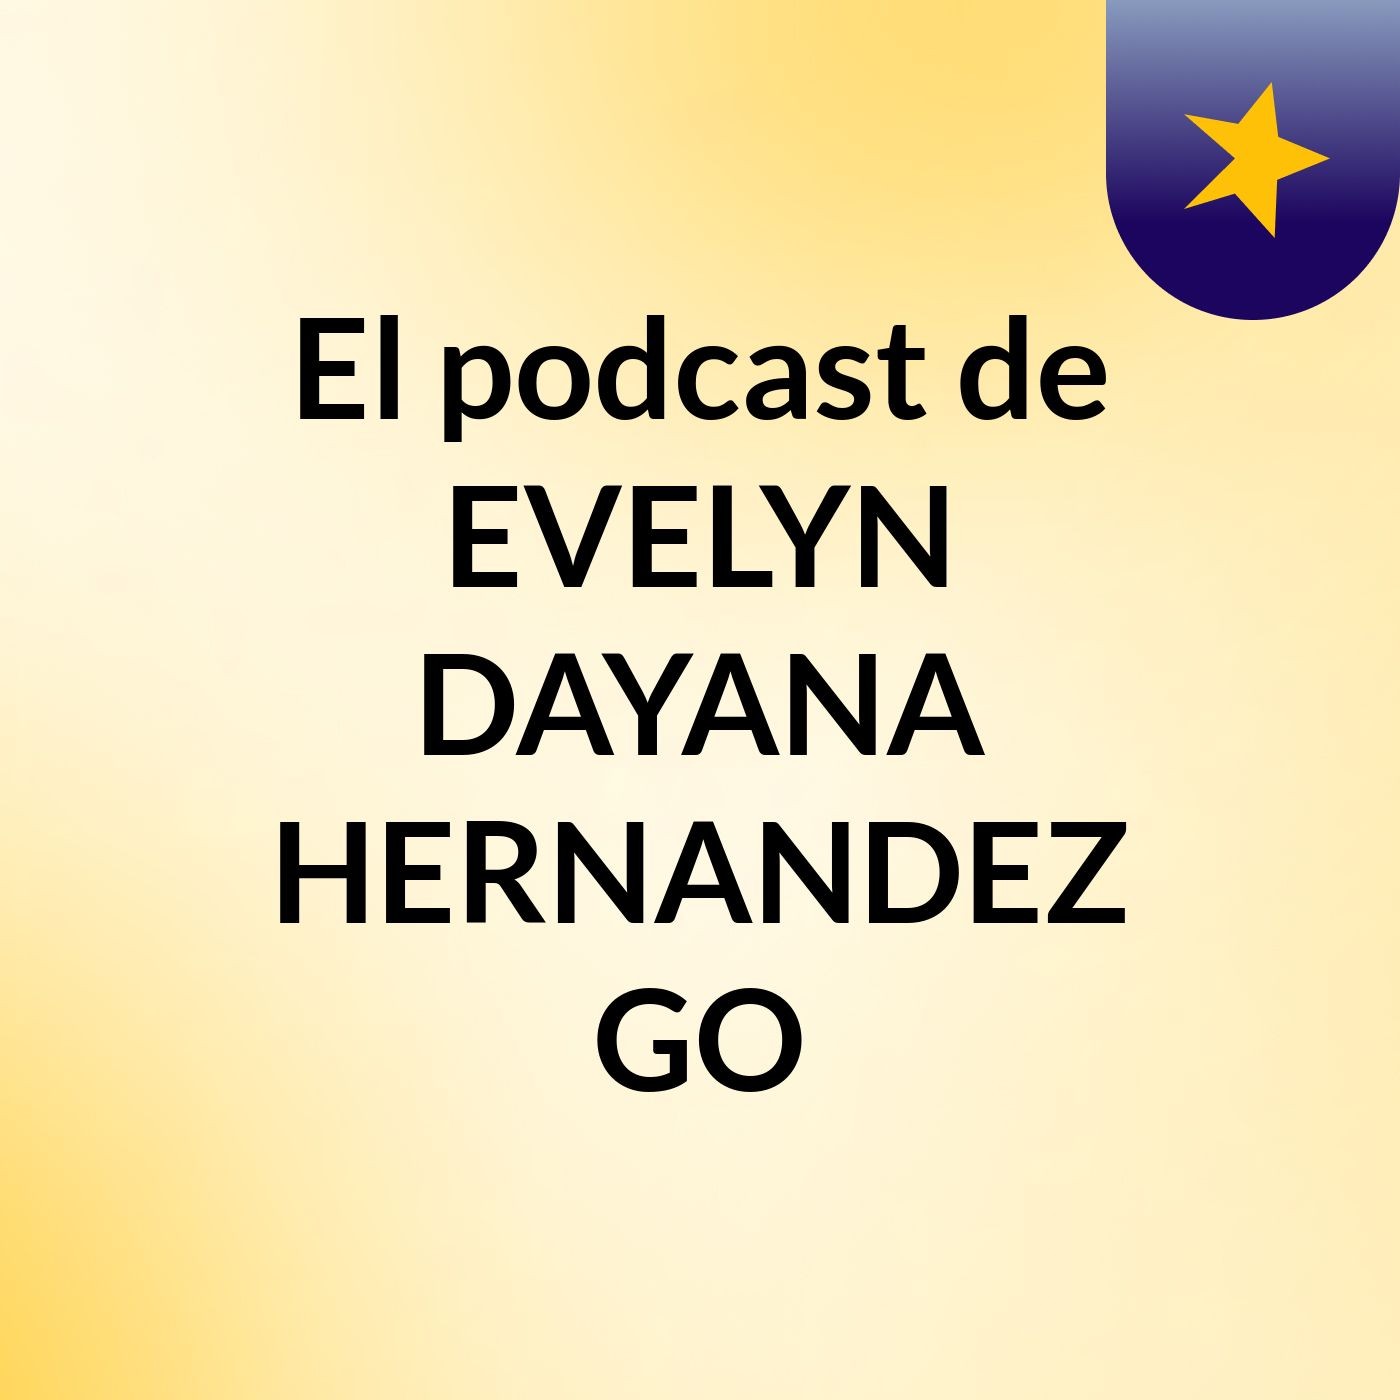 El podcast de EVELYN DAYANA HERNANDEZ GO